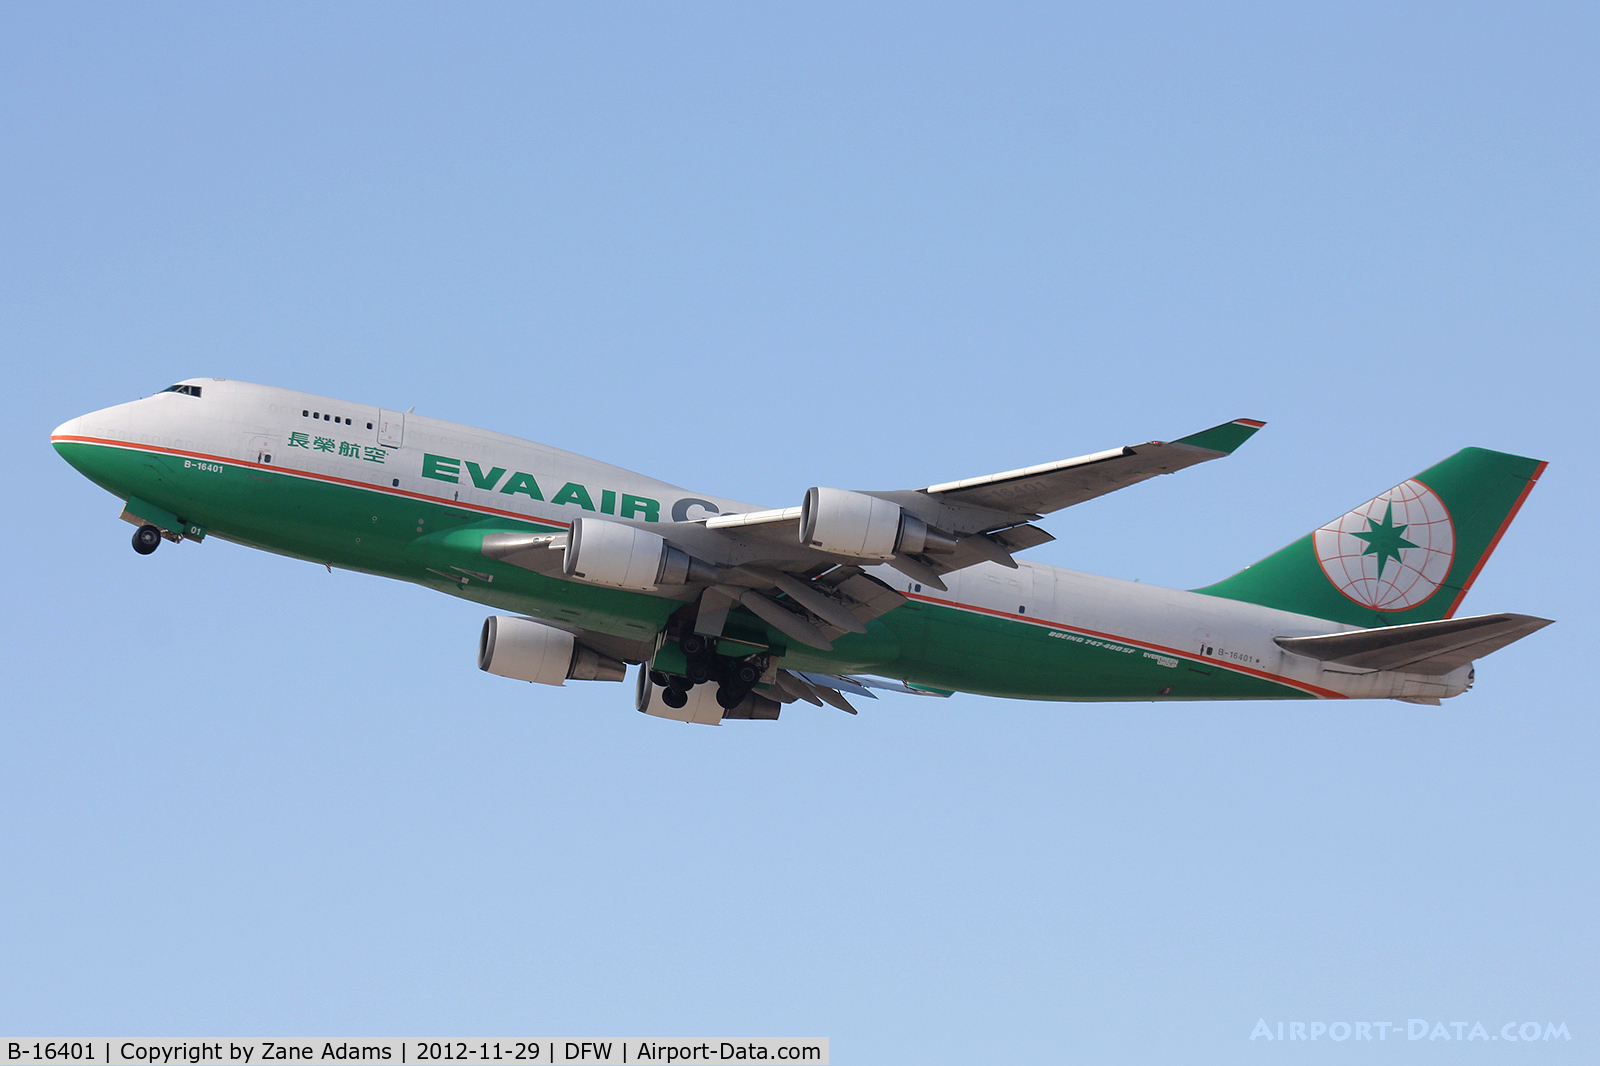 B-16401, 1992 Boeing 747-45EBD(SF) C/N 27062, EVA Air Cargo departing DFW Airport